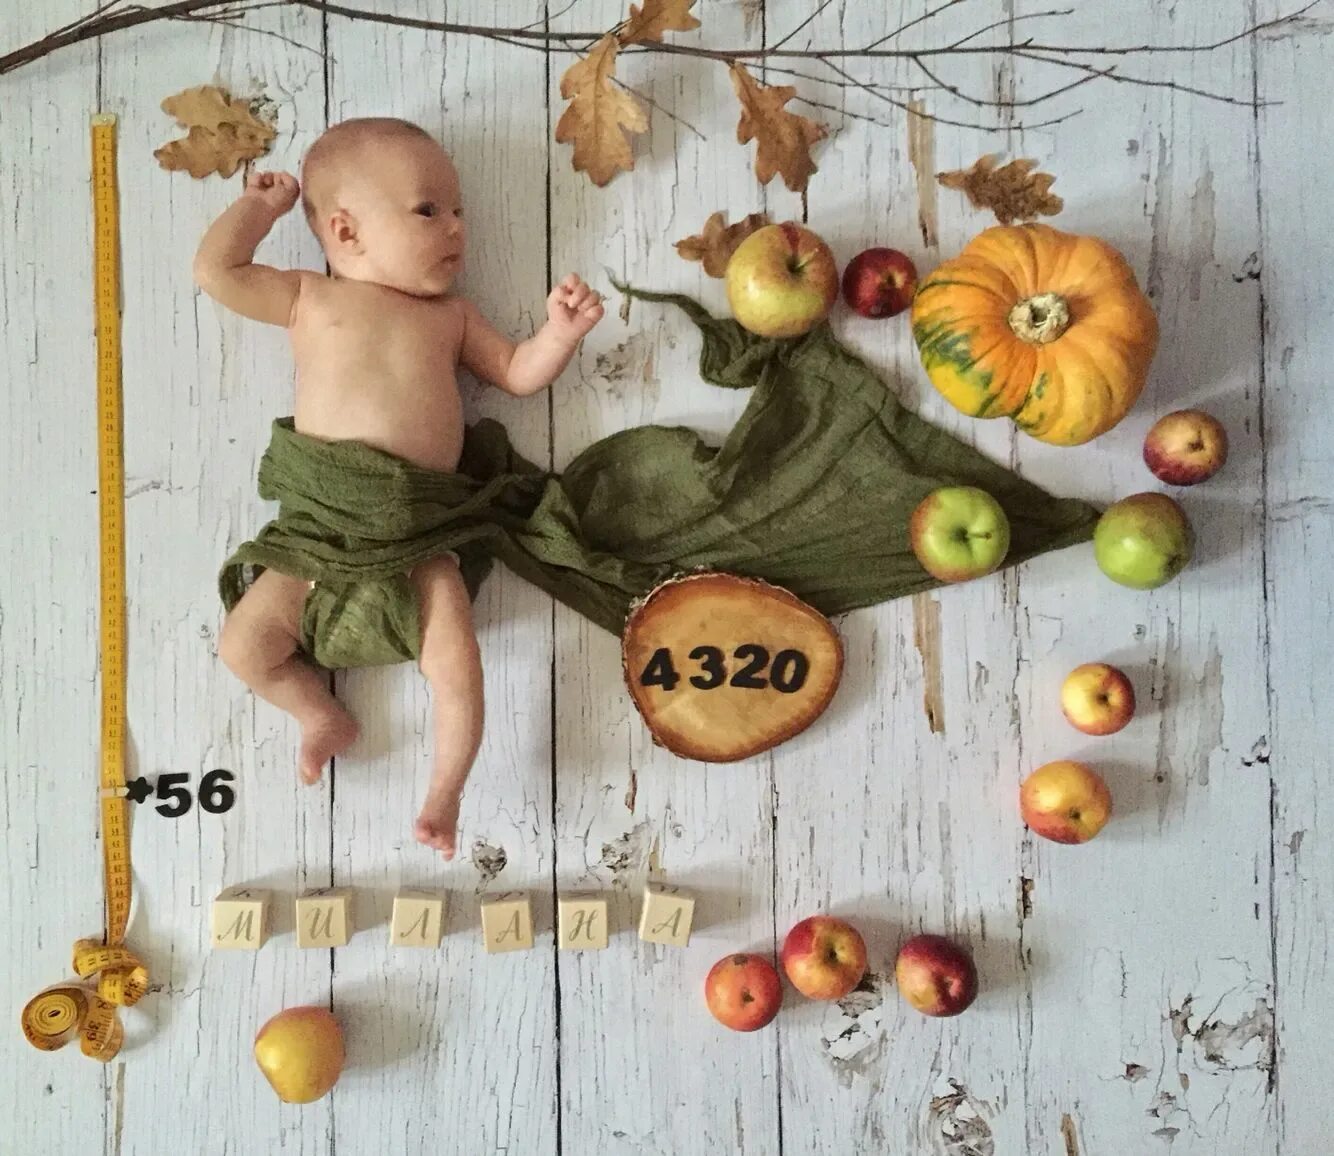 12 months 2. Фотосессия ребенка по месяцам. Фотосессия по месяцам малыша. Фотосессия по месяцам малыша с цифрами. Фотосессия младенцев по месяцам с фруктами.